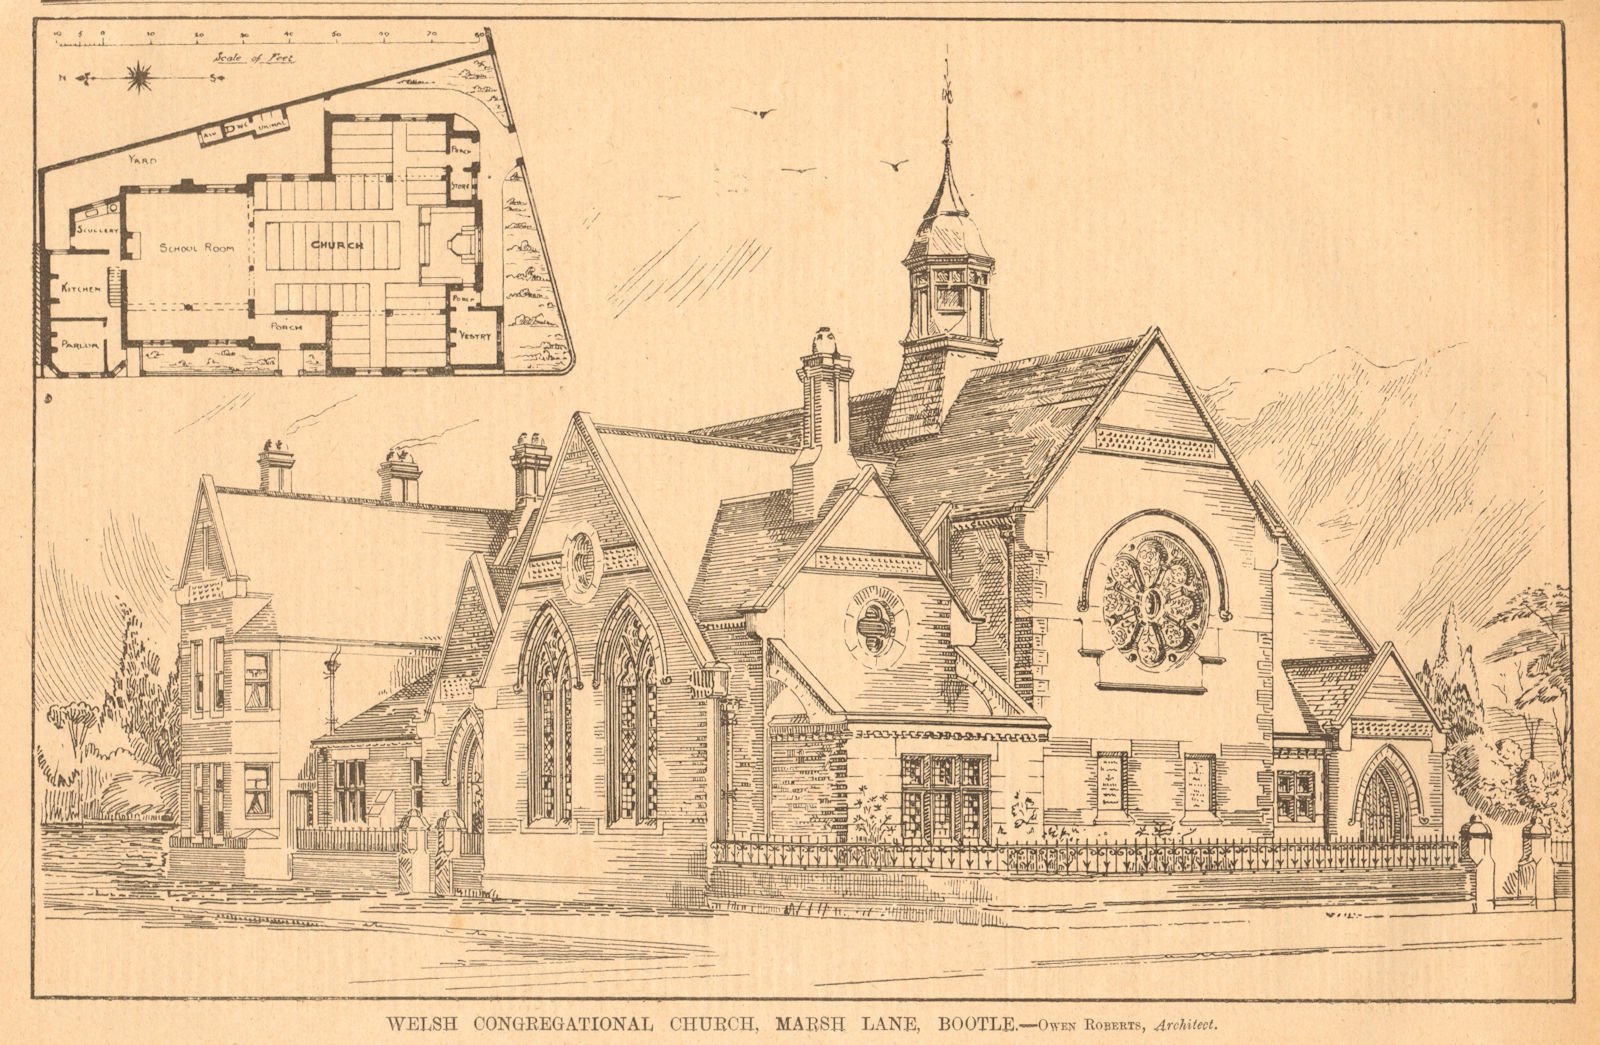 Associate Product Welsh Congregational Church, Marsh Lane, Bootle - Owen Roberts, Architect 1899